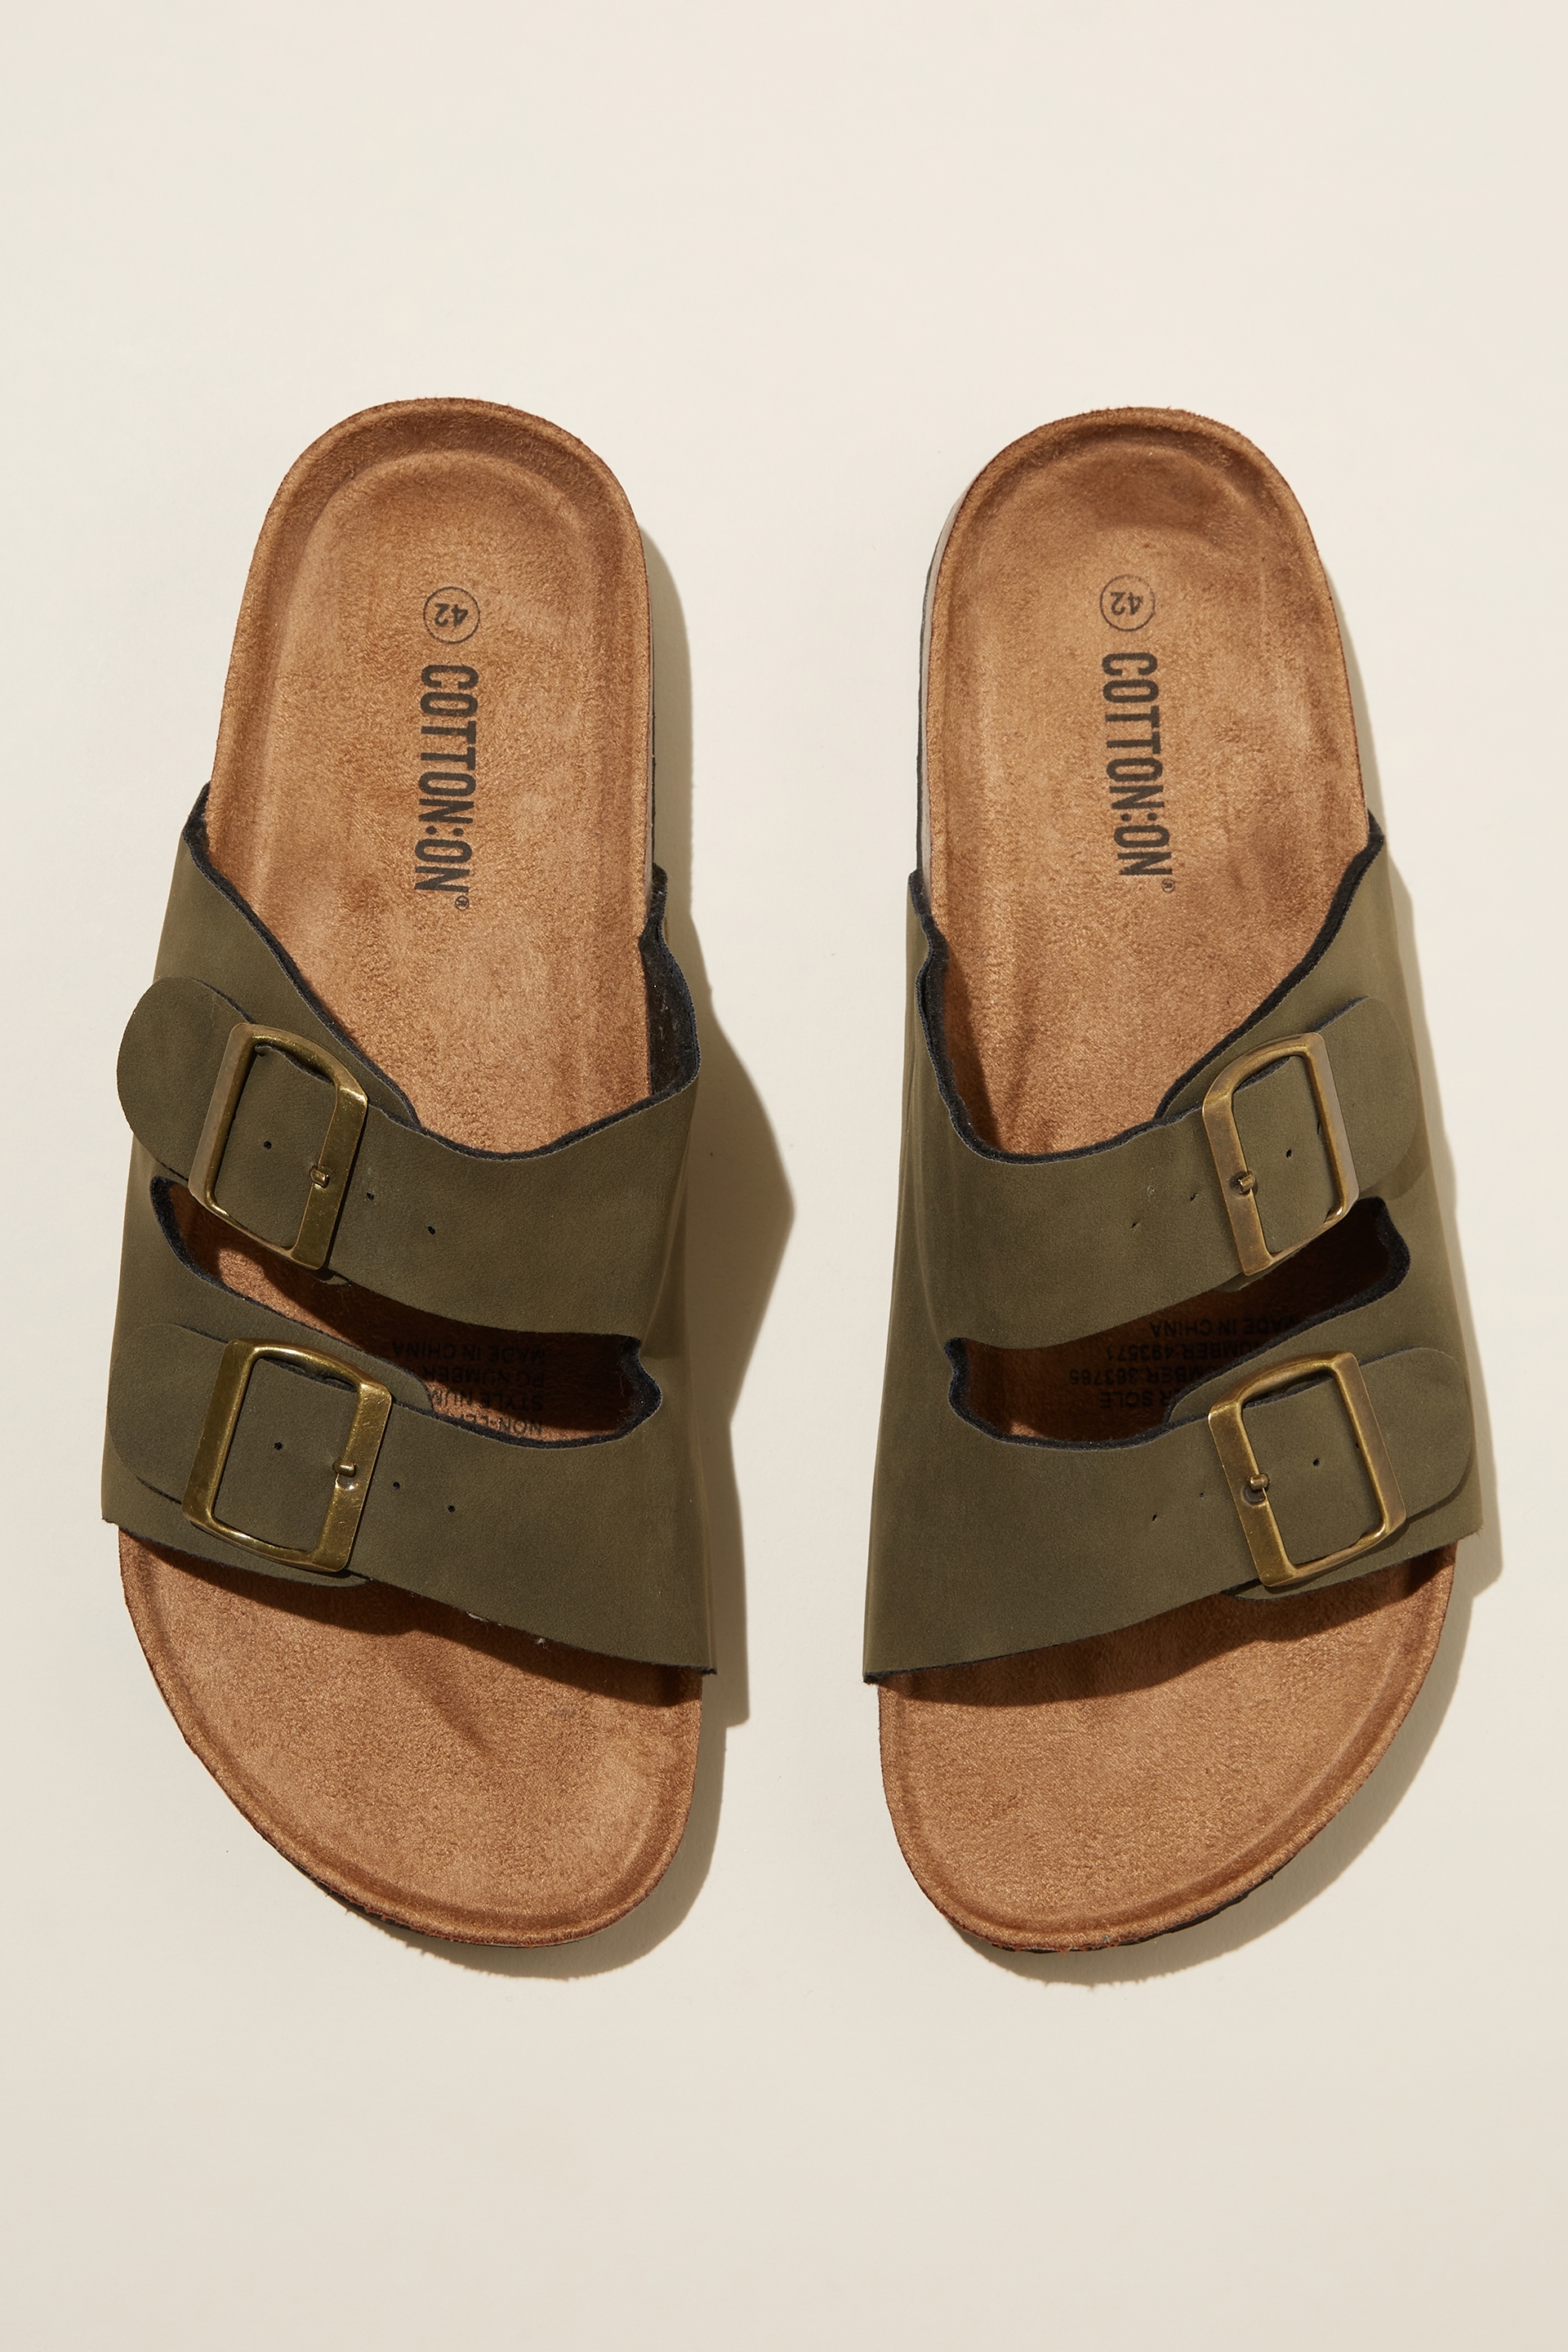 Interbios 7206 Bio Double buckle sandals for men in brown